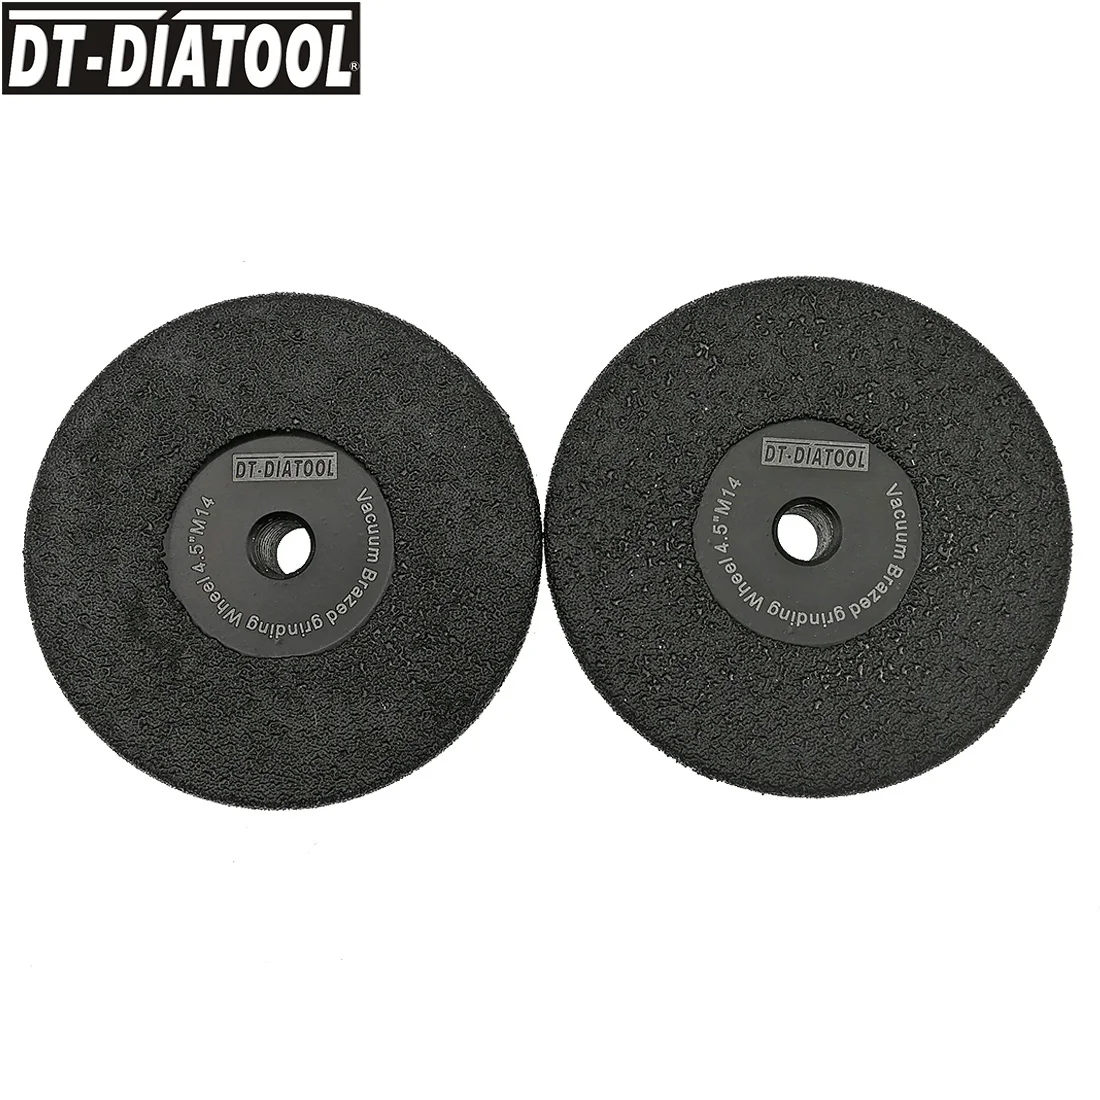 DT-DIATOOL 2 kom. Promjer 115 mm/4,5 